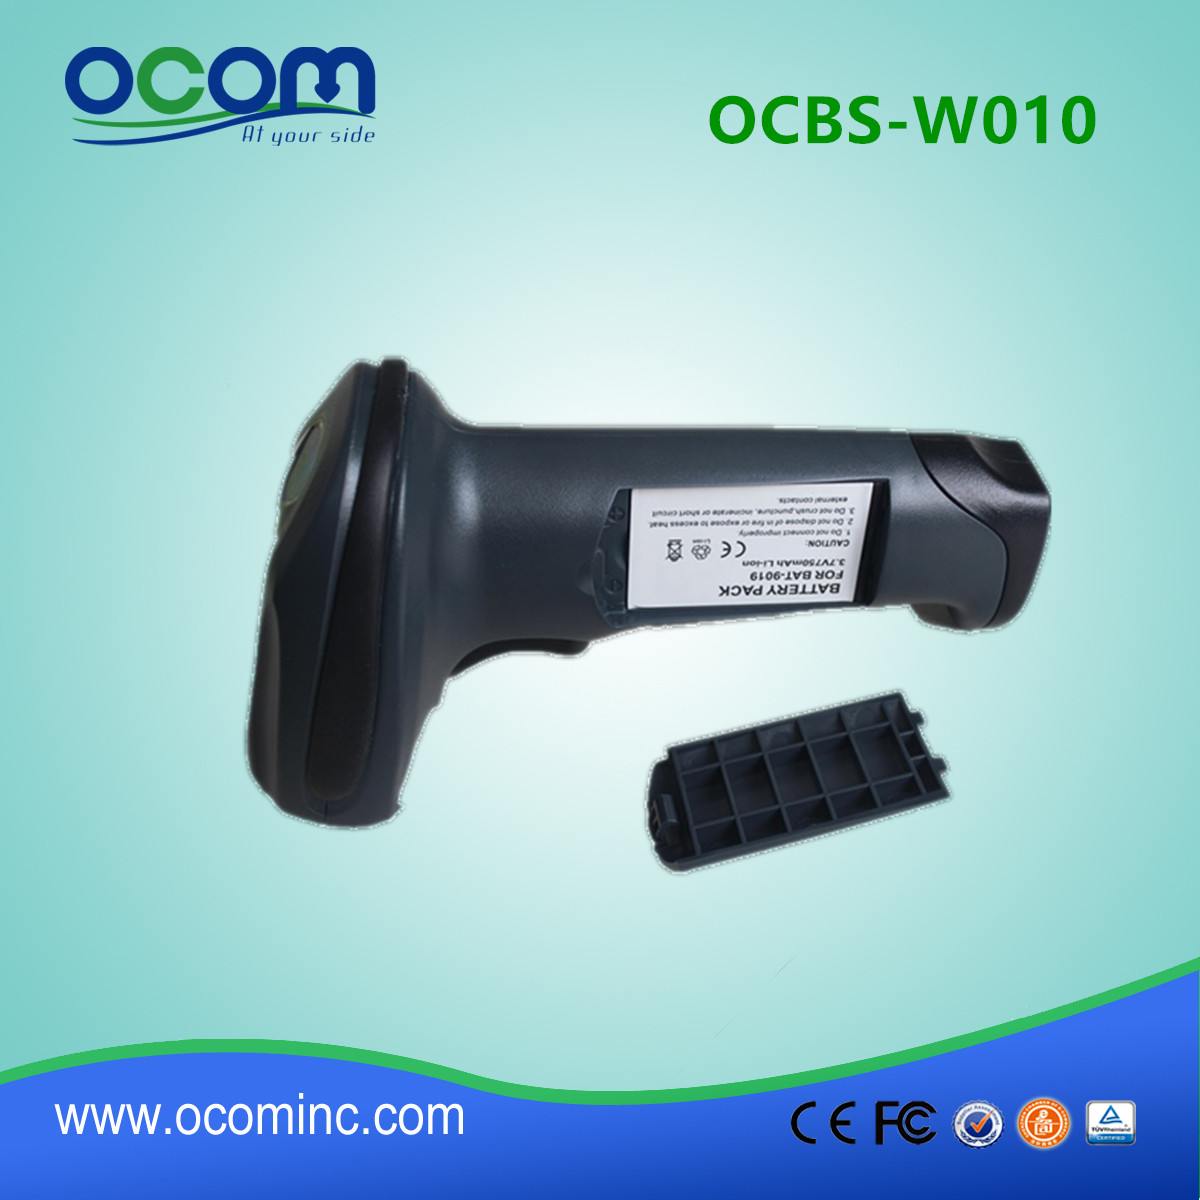 OCBS-W010 Warehouse cordless handheld 1d laser barcode scanner